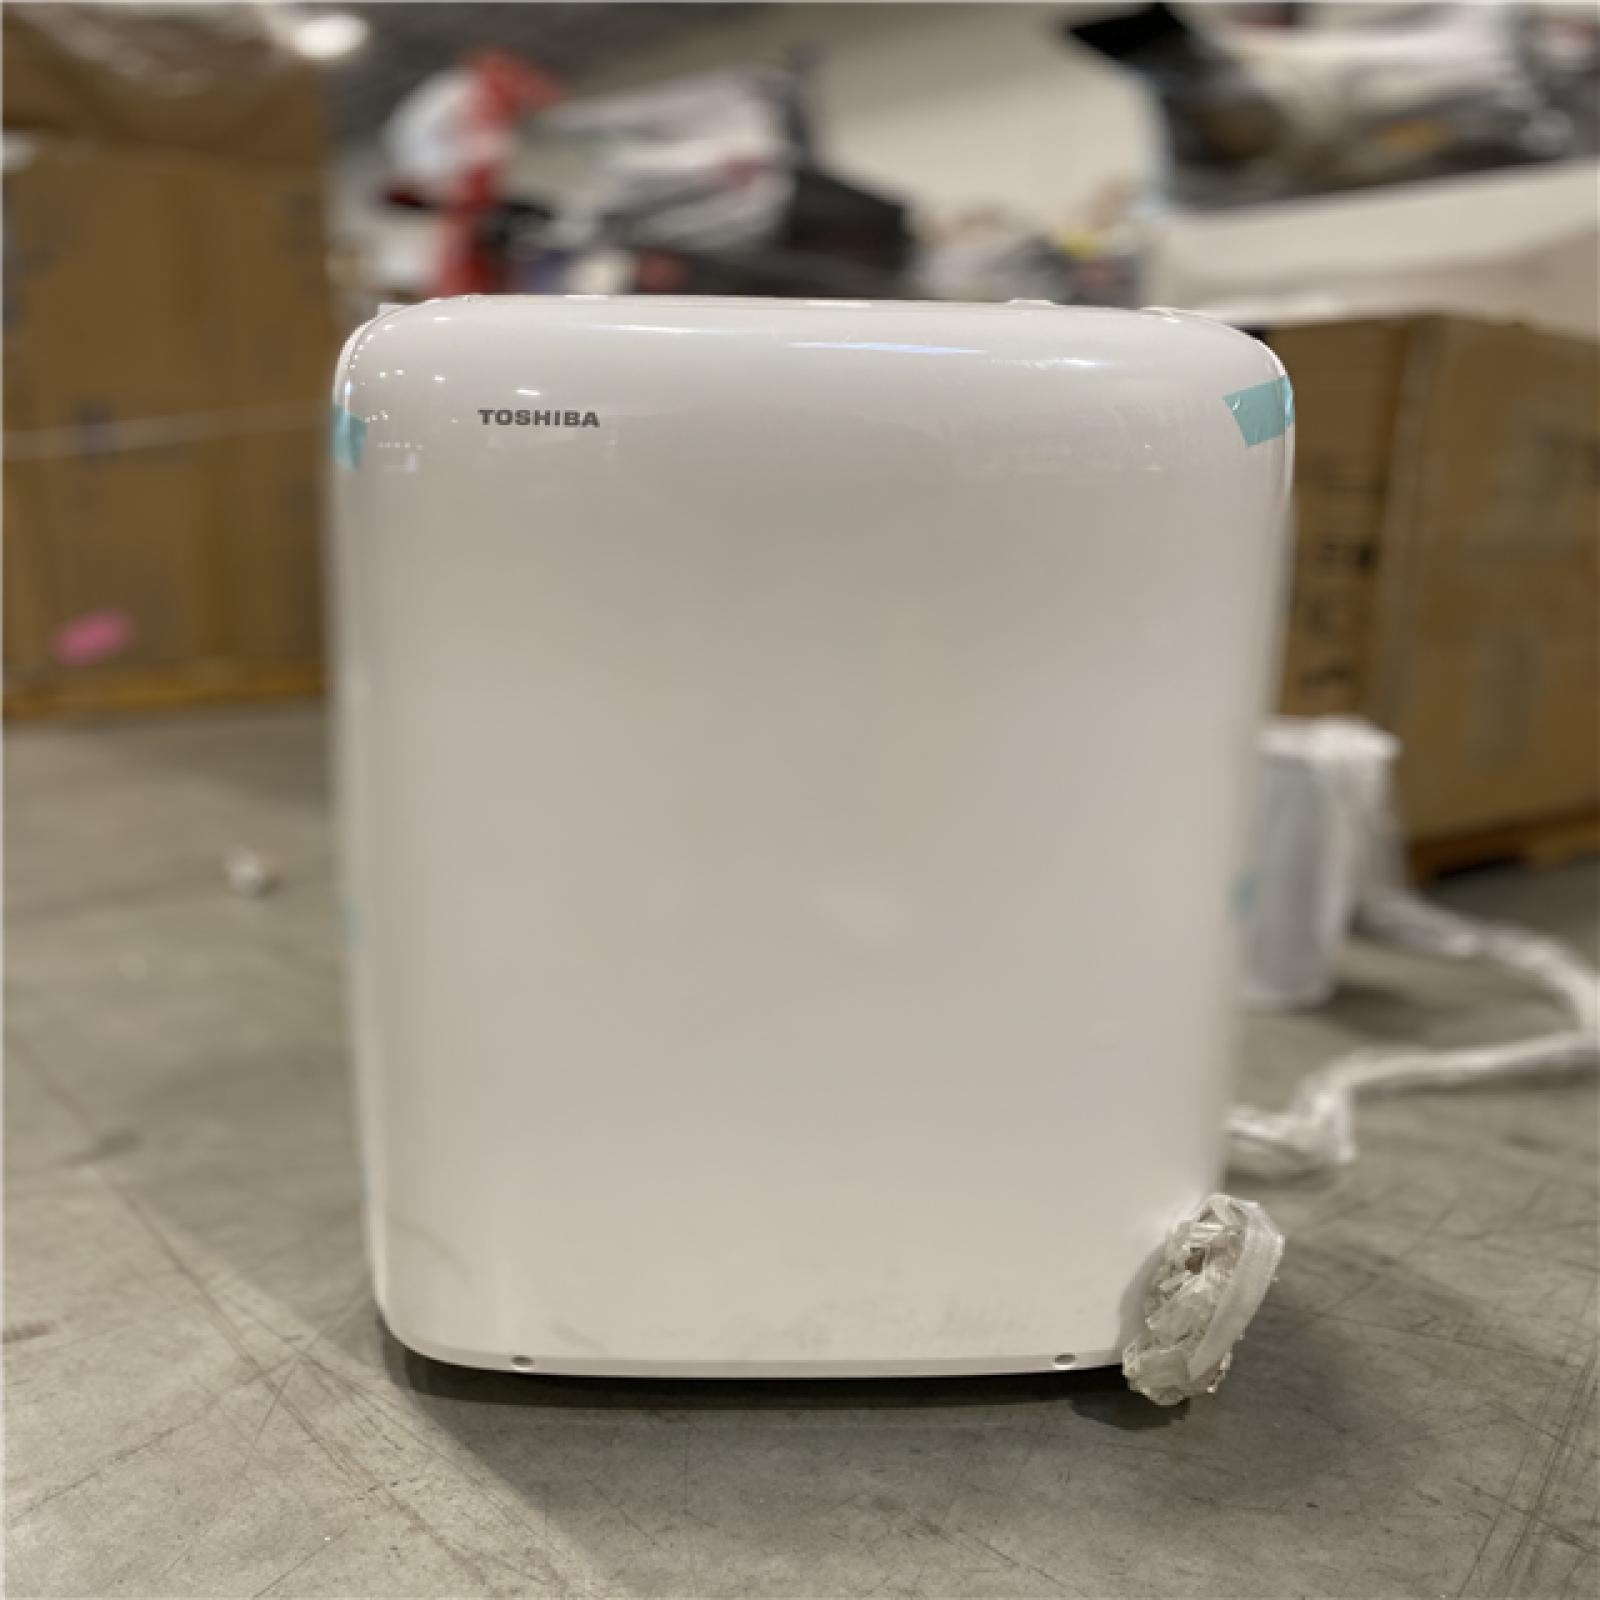 DALLAS LOCATION - Toshiba 8,000 BTU Portable Air Conditioner Cools 350 Sq. Ft. with Dehumidifier and Remote in White